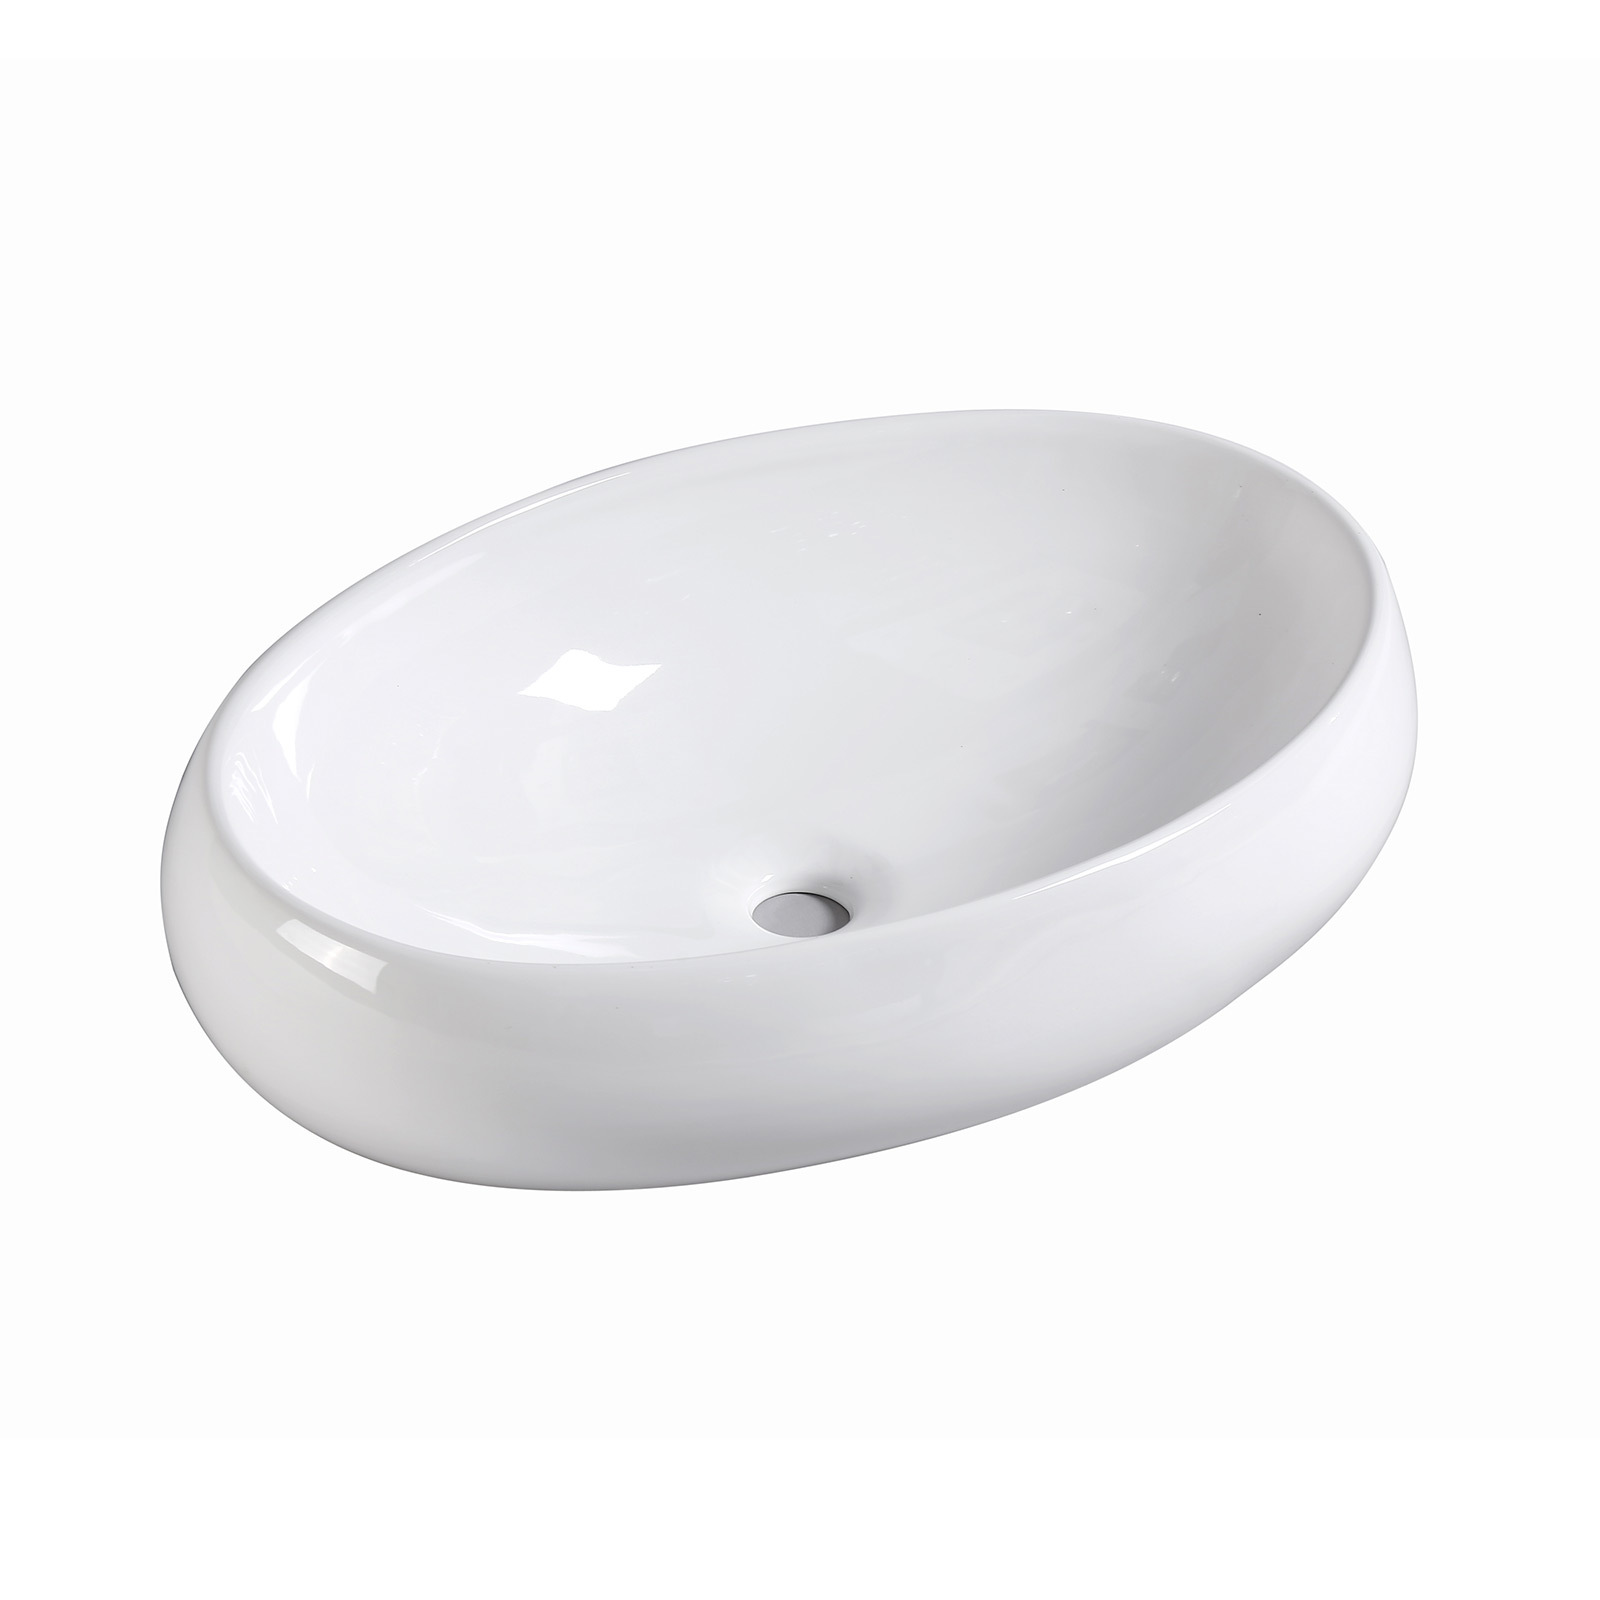 59 x 40 x 14.5cm Ceramic Bathroom Basin Oval - WHITE